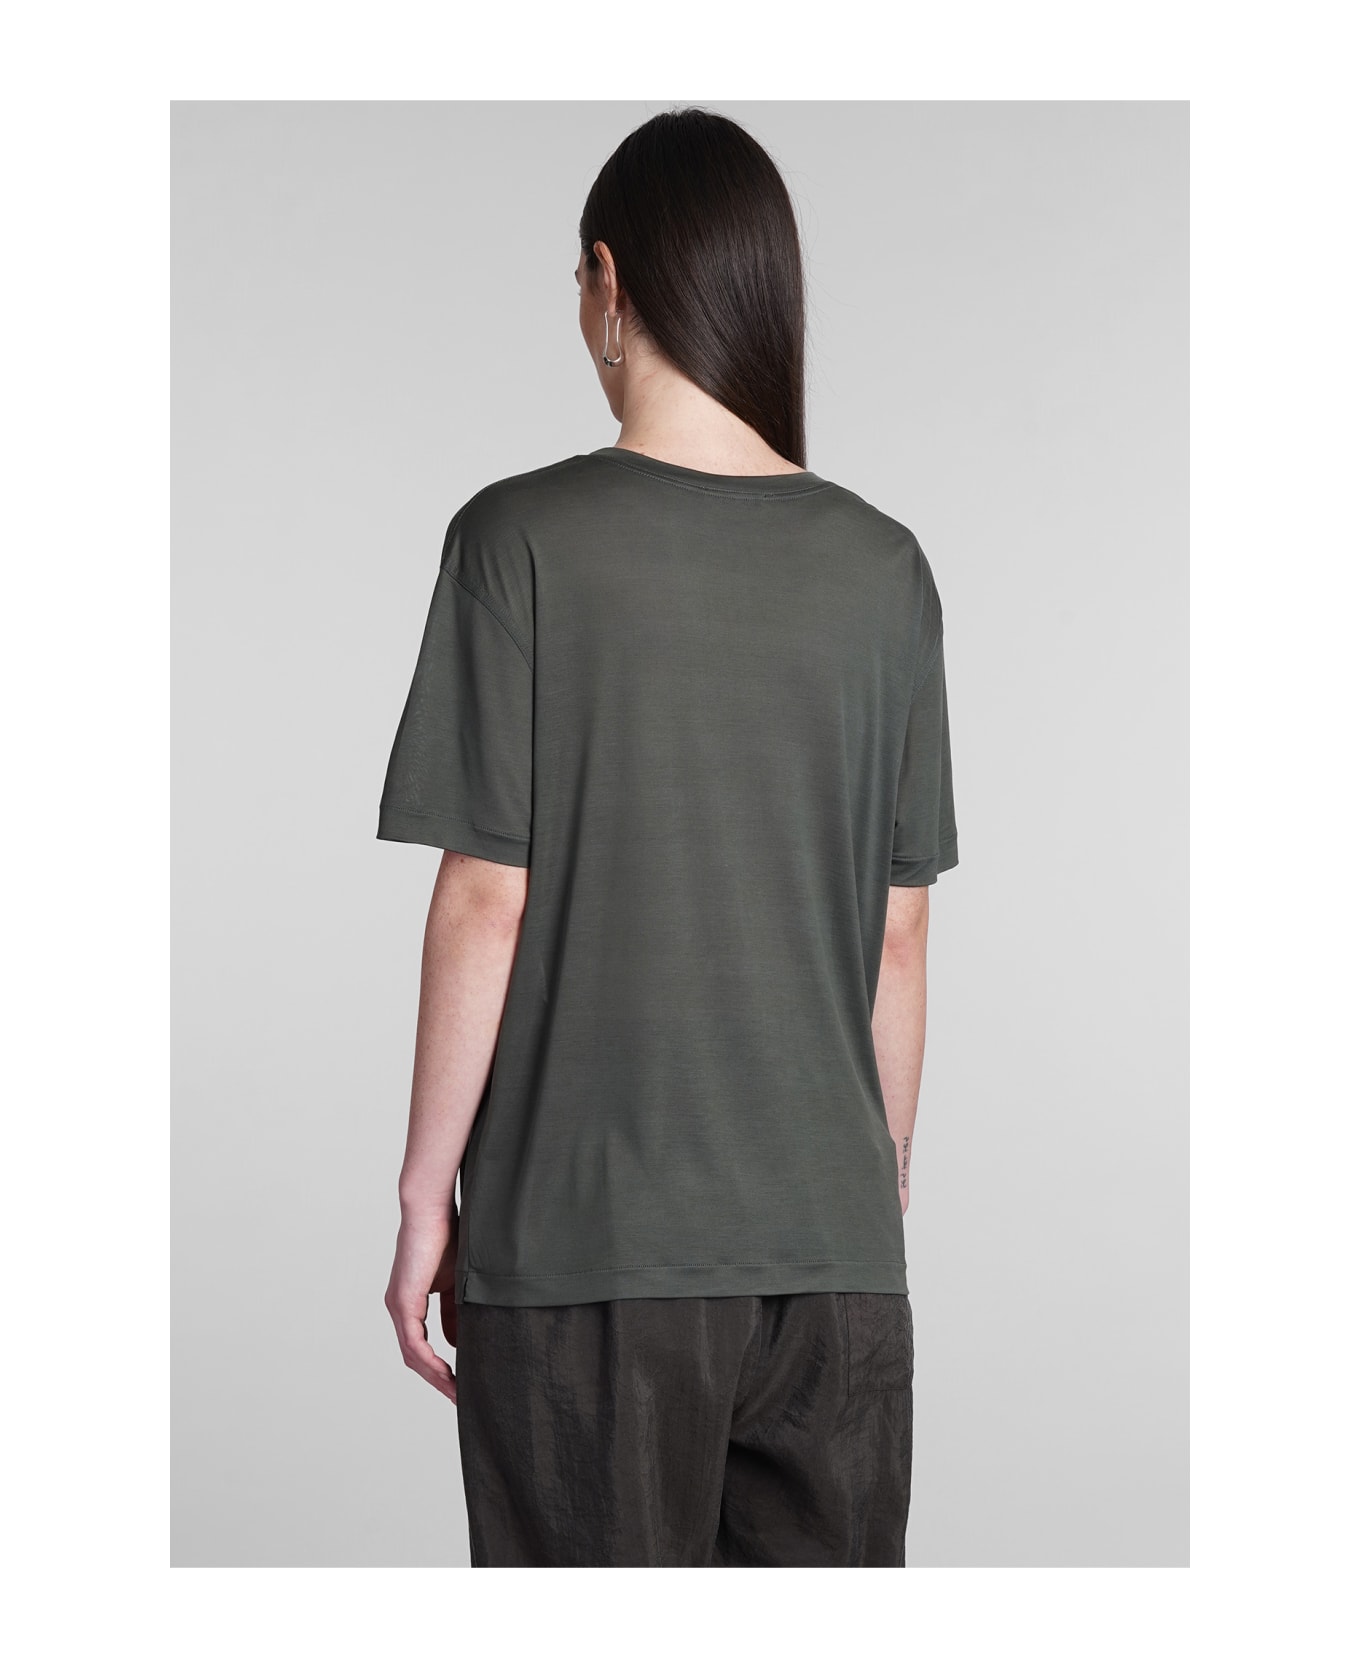 Lemaire T-shirt In Green Silk - green